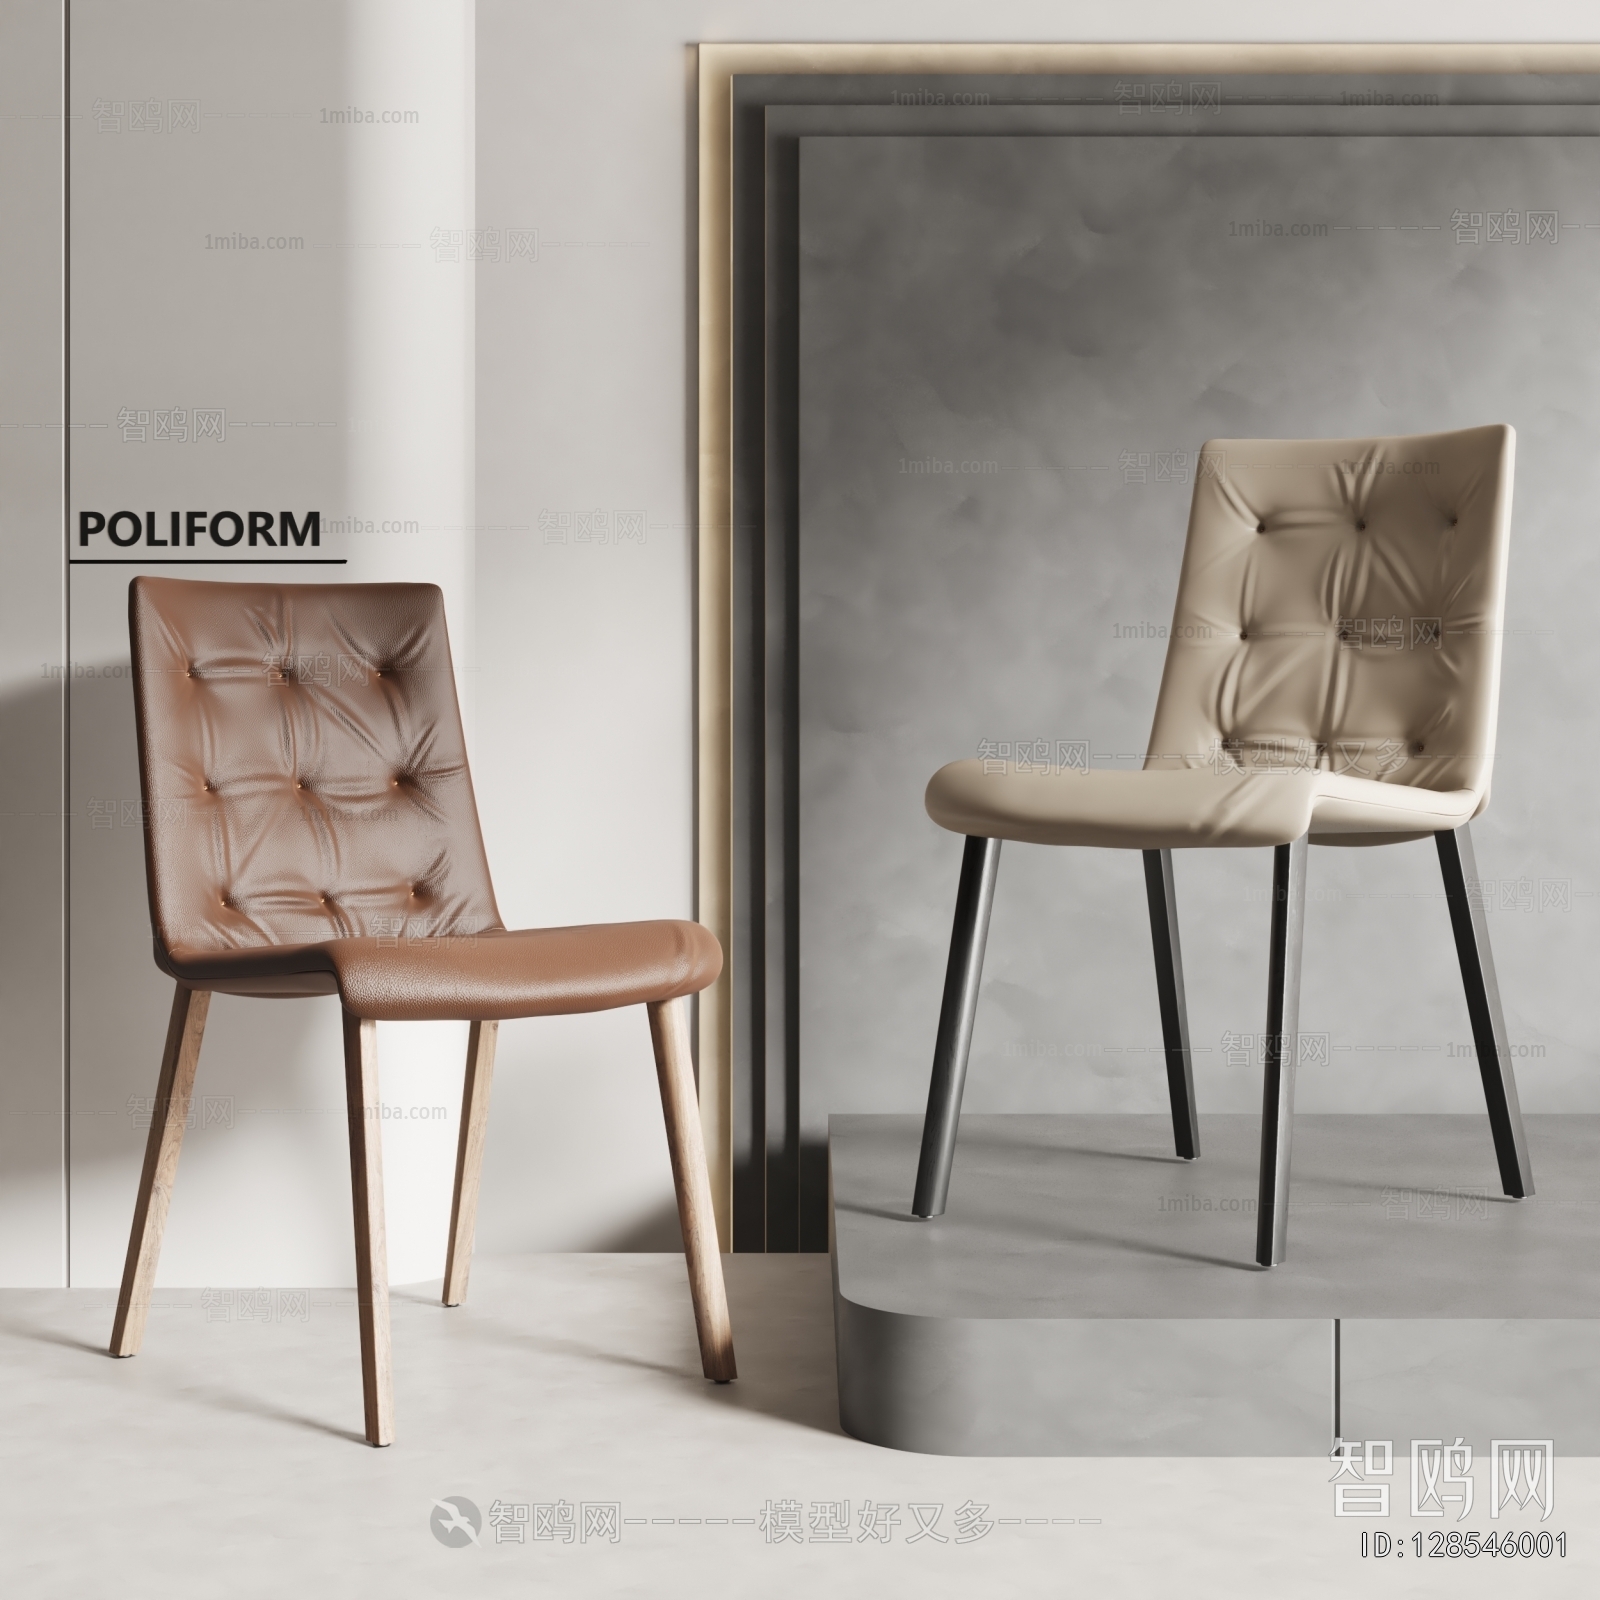 poliform现代皮革餐椅